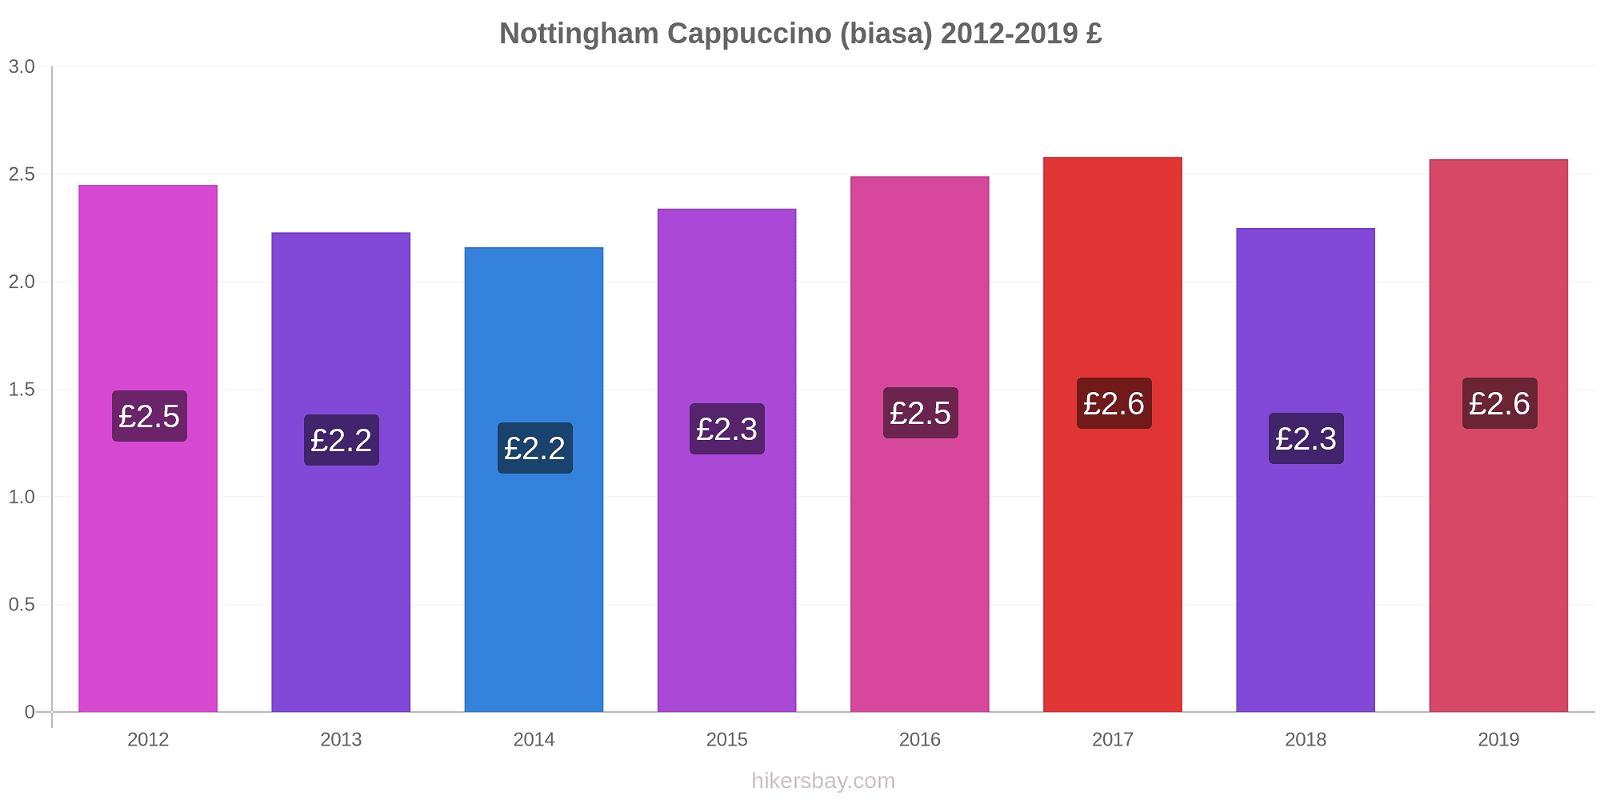 Nottingham perubahan harga Cappuccino (biasa) hikersbay.com